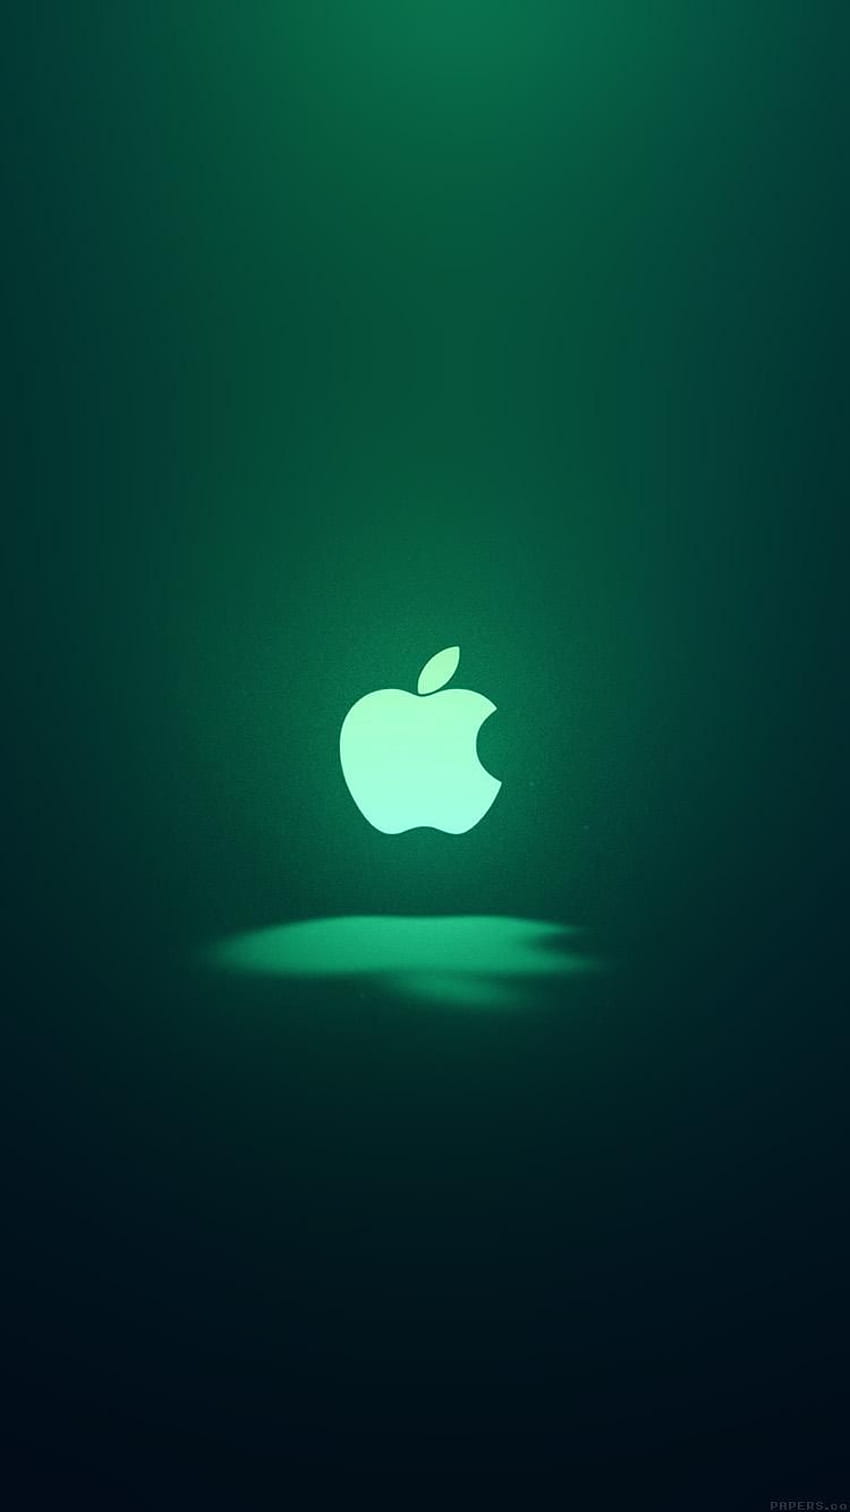 Apple'tite!, Green iPhone 6 wallpaper ponsel HD